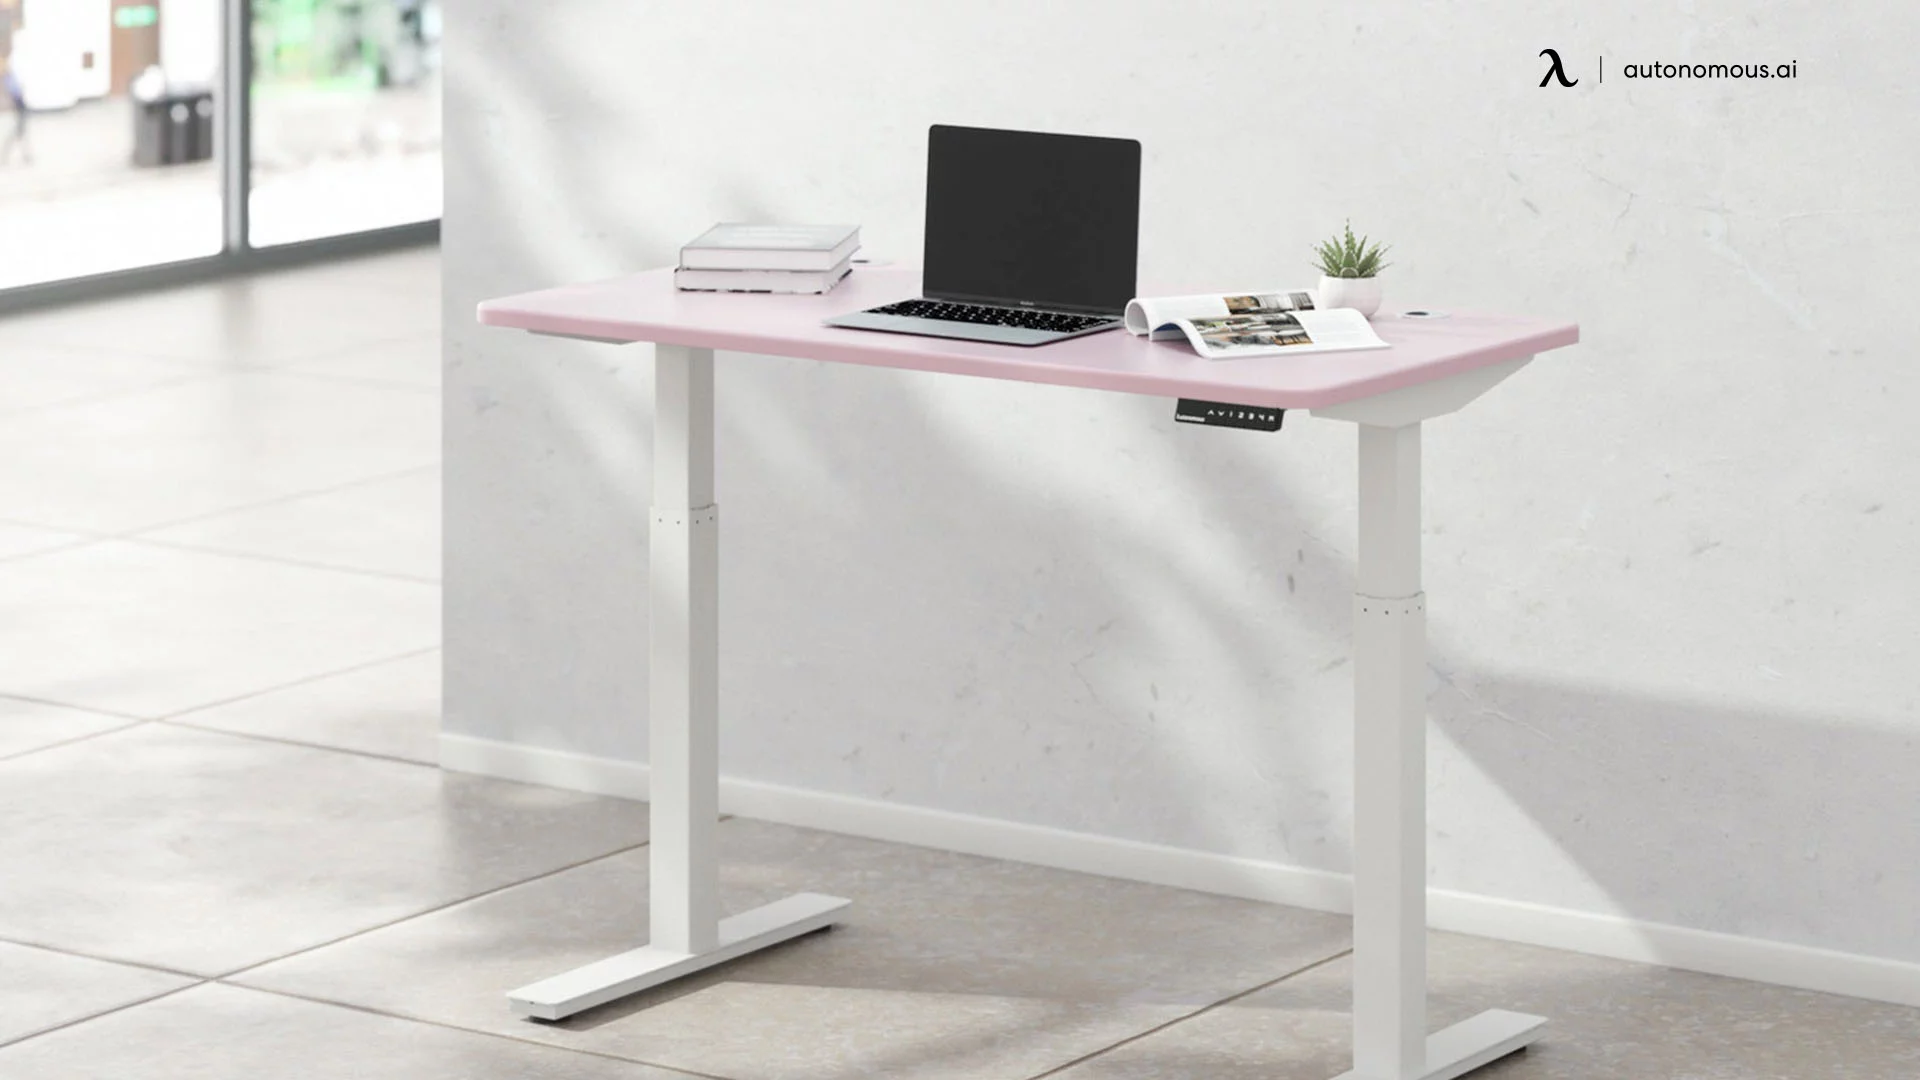 Find a feminine desk girly office ideas